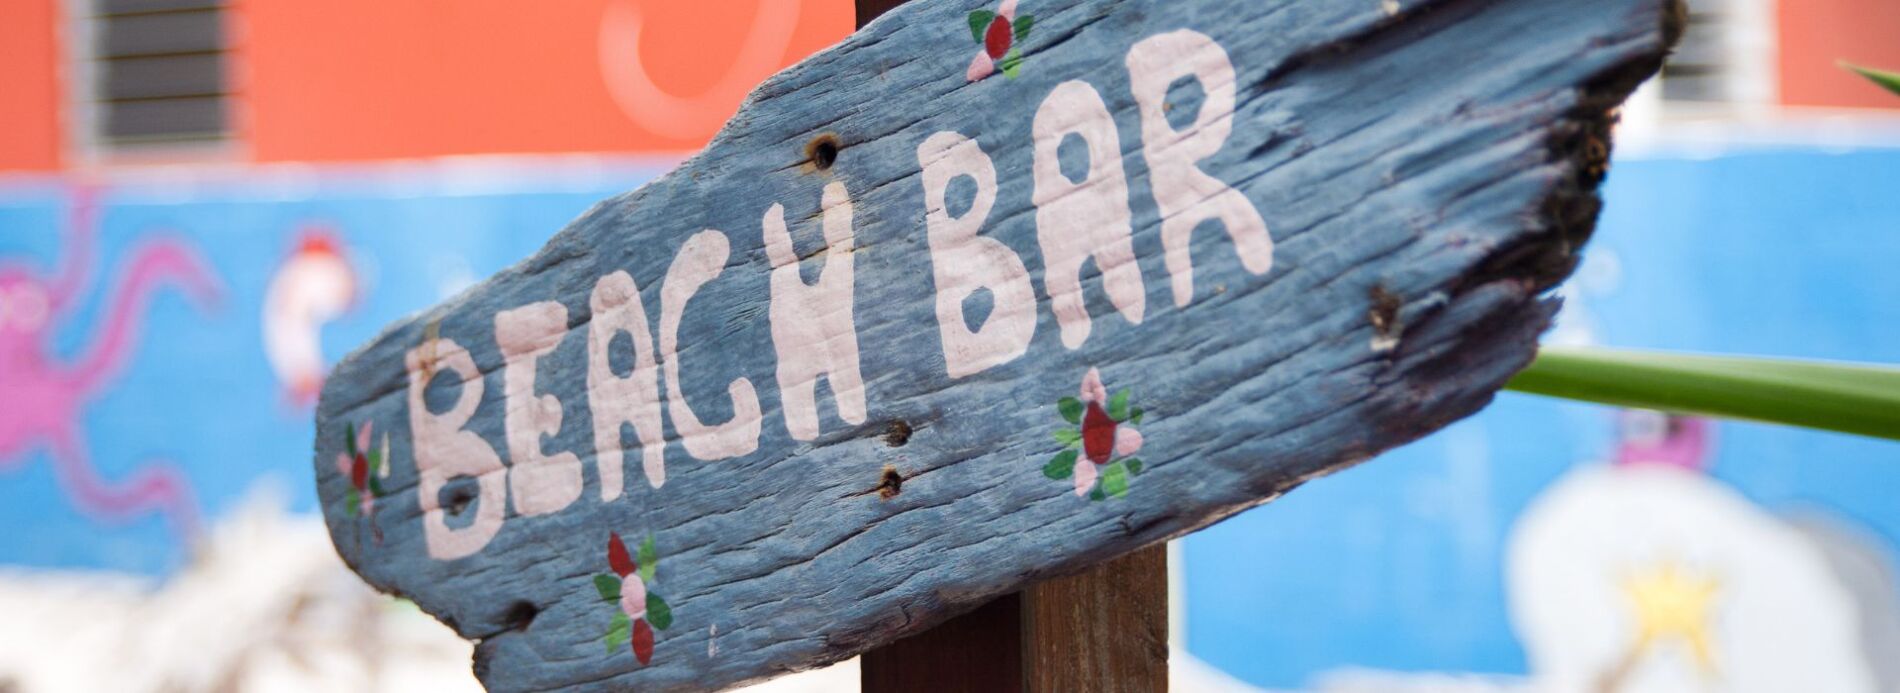 Beach bar sign